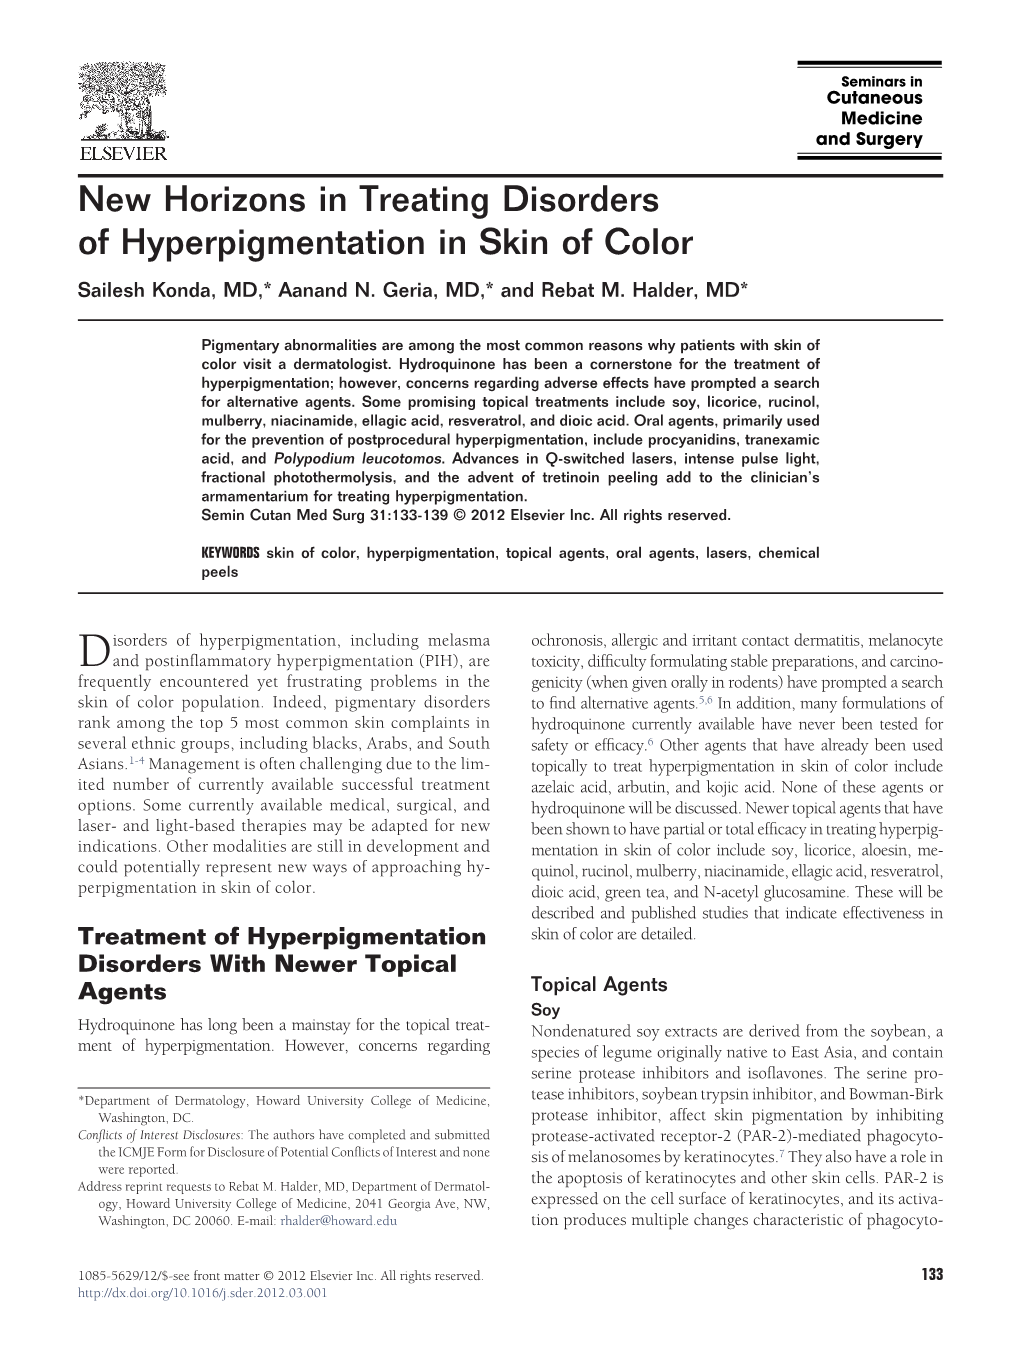 New Horizons in Treating Disorders of Hyperpigmentation in Skin of Color Sailesh Konda, MD,* Aanand N